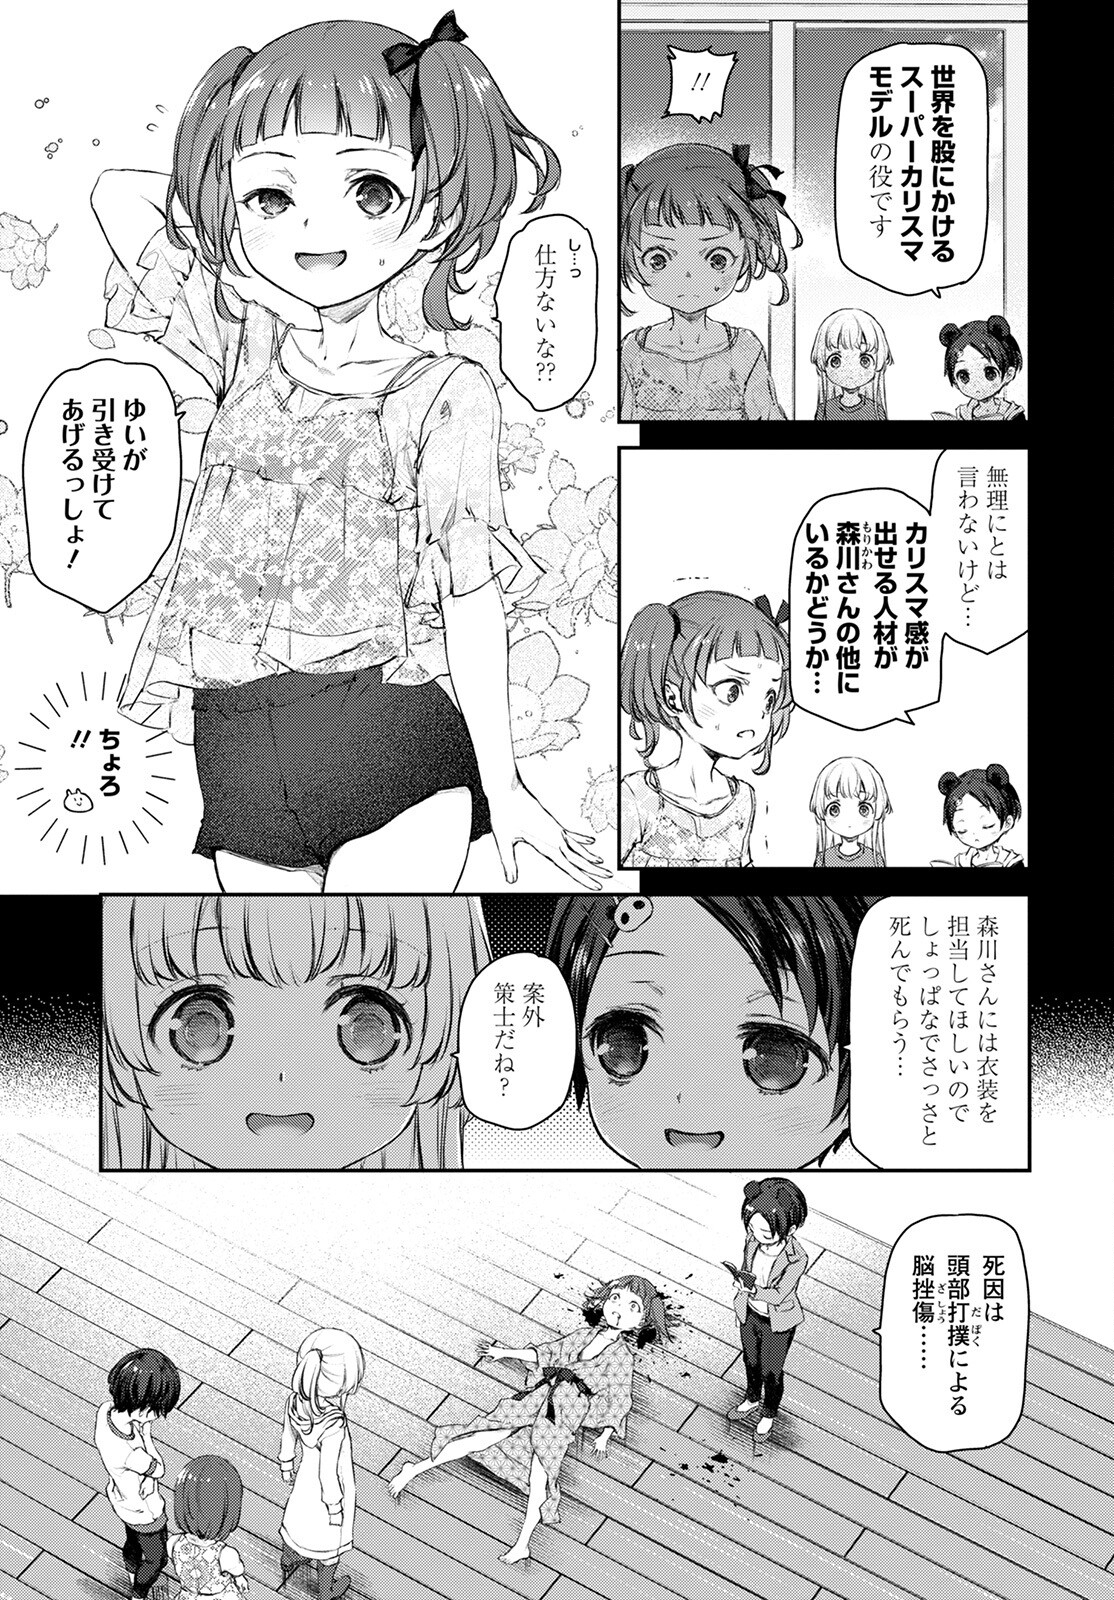 Uchi no Maid ga Uzasugiru! - Chapter 53 - Page 7